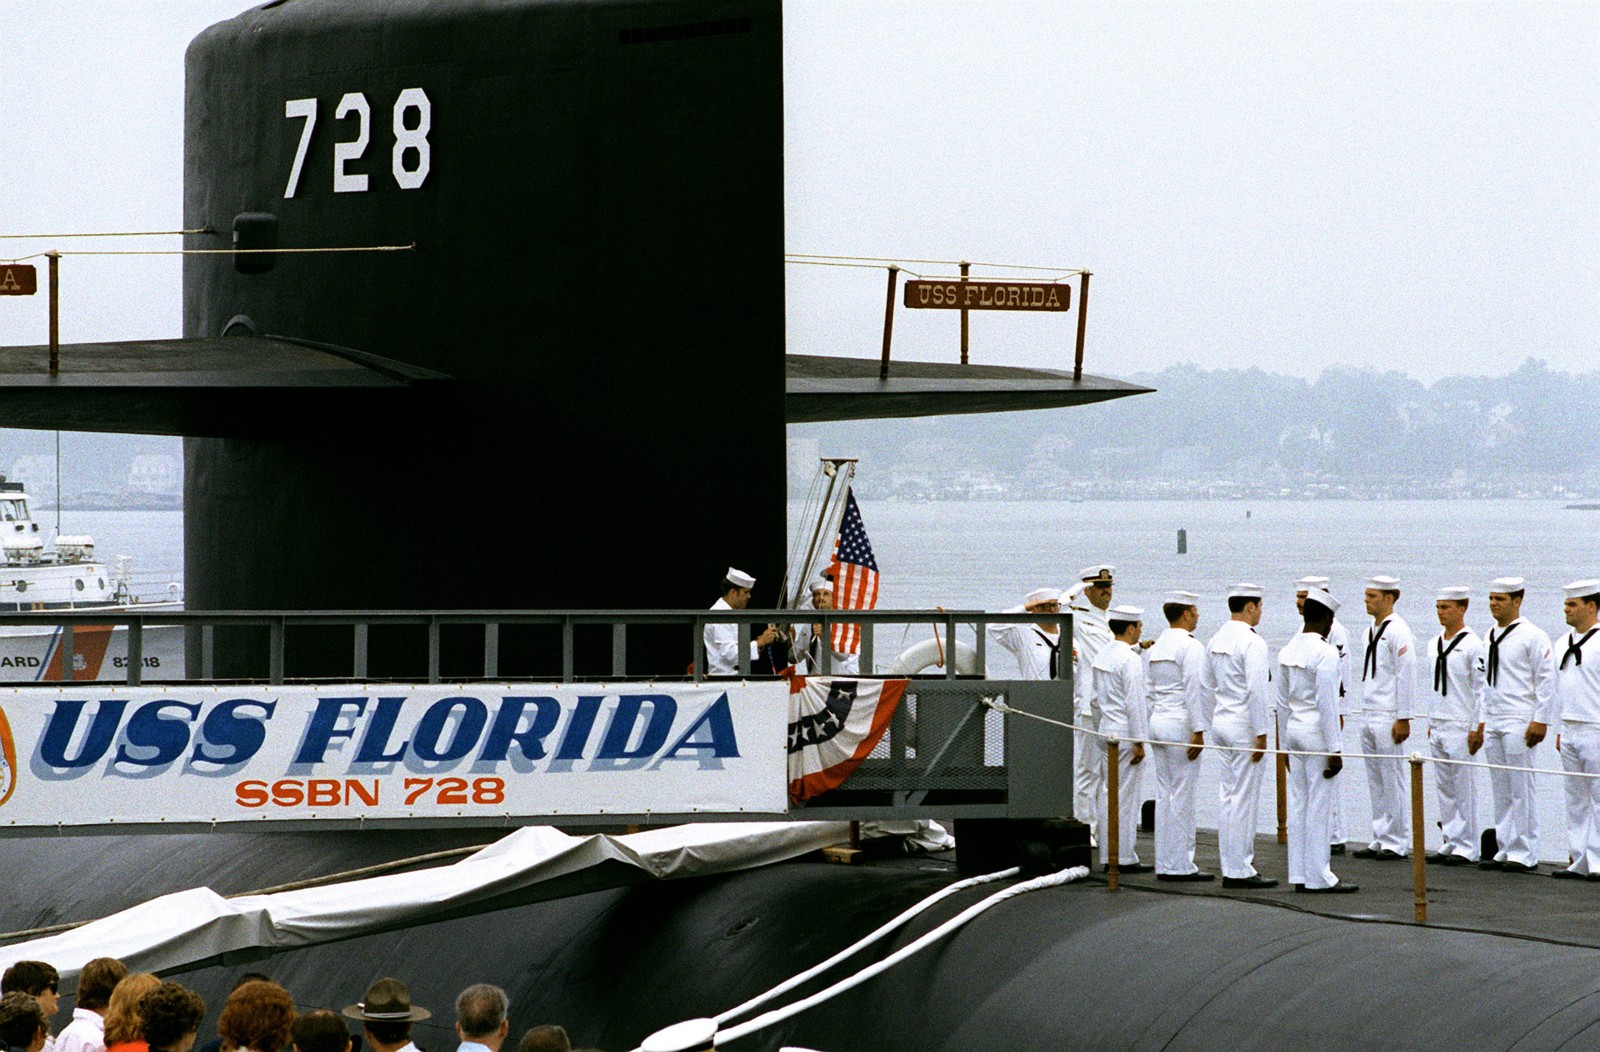 ssbn-728 uss florida ballistic missile submarine us navy 1983 commissioning ceremony groton connecticut